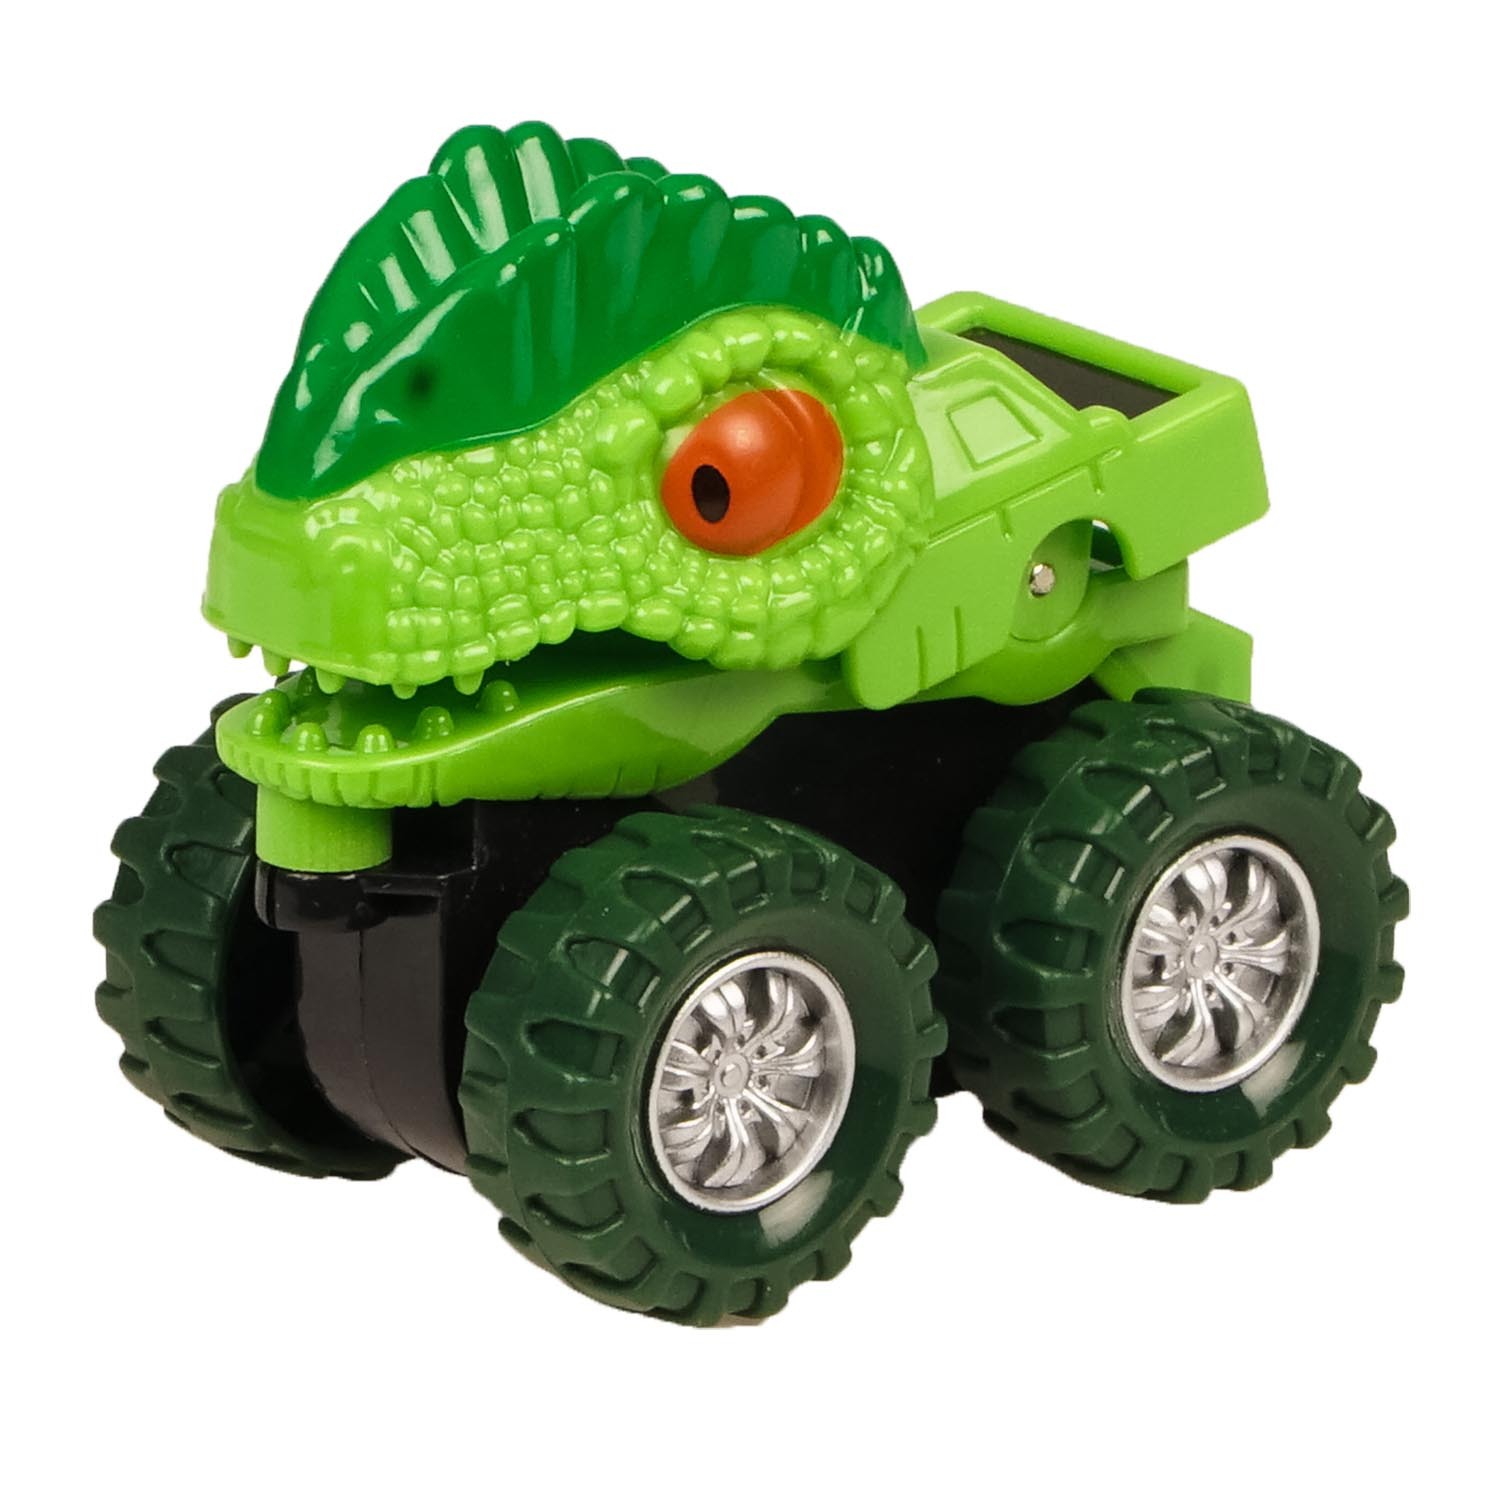 Tracksterz Multi Coloured Monster Trucks Toy 5 Pack Image 6